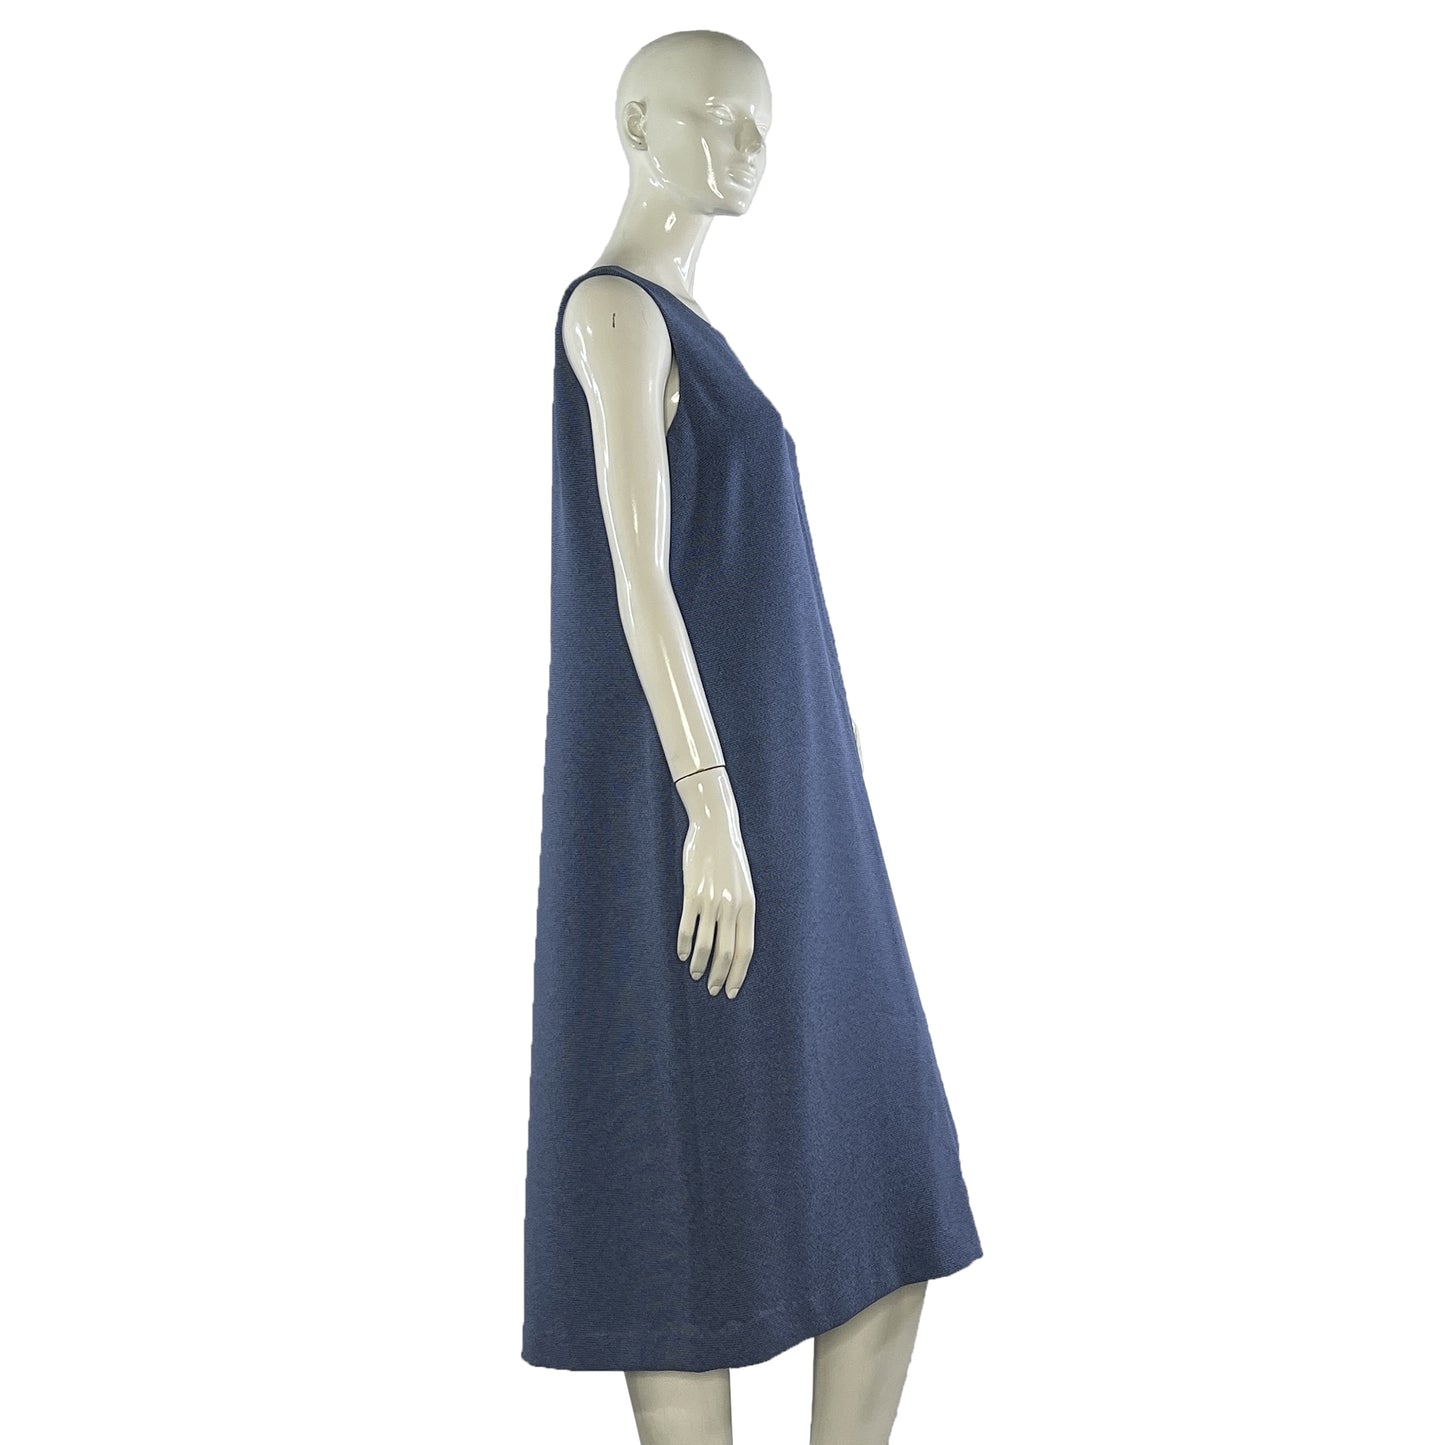 Talbots Dress Sleeveless Below-Knee Periwinkle Size 14 SKU 000414